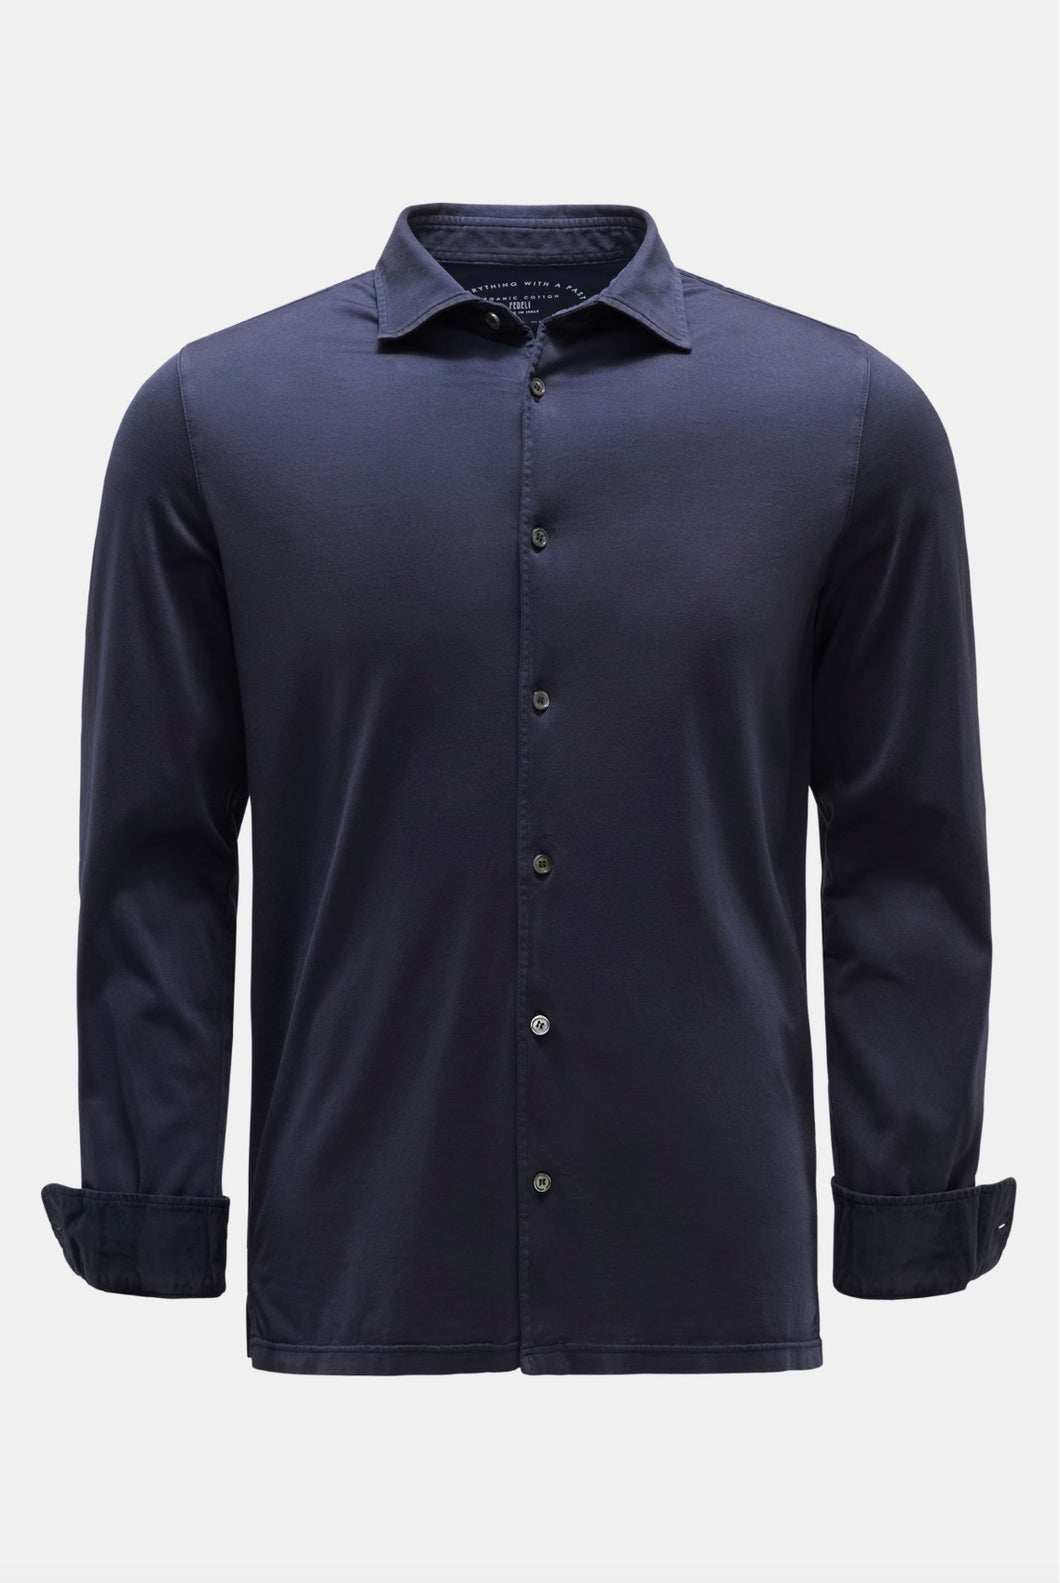 Fedeli 'Jason' Giza Cotton Jersey Shirt, Navy